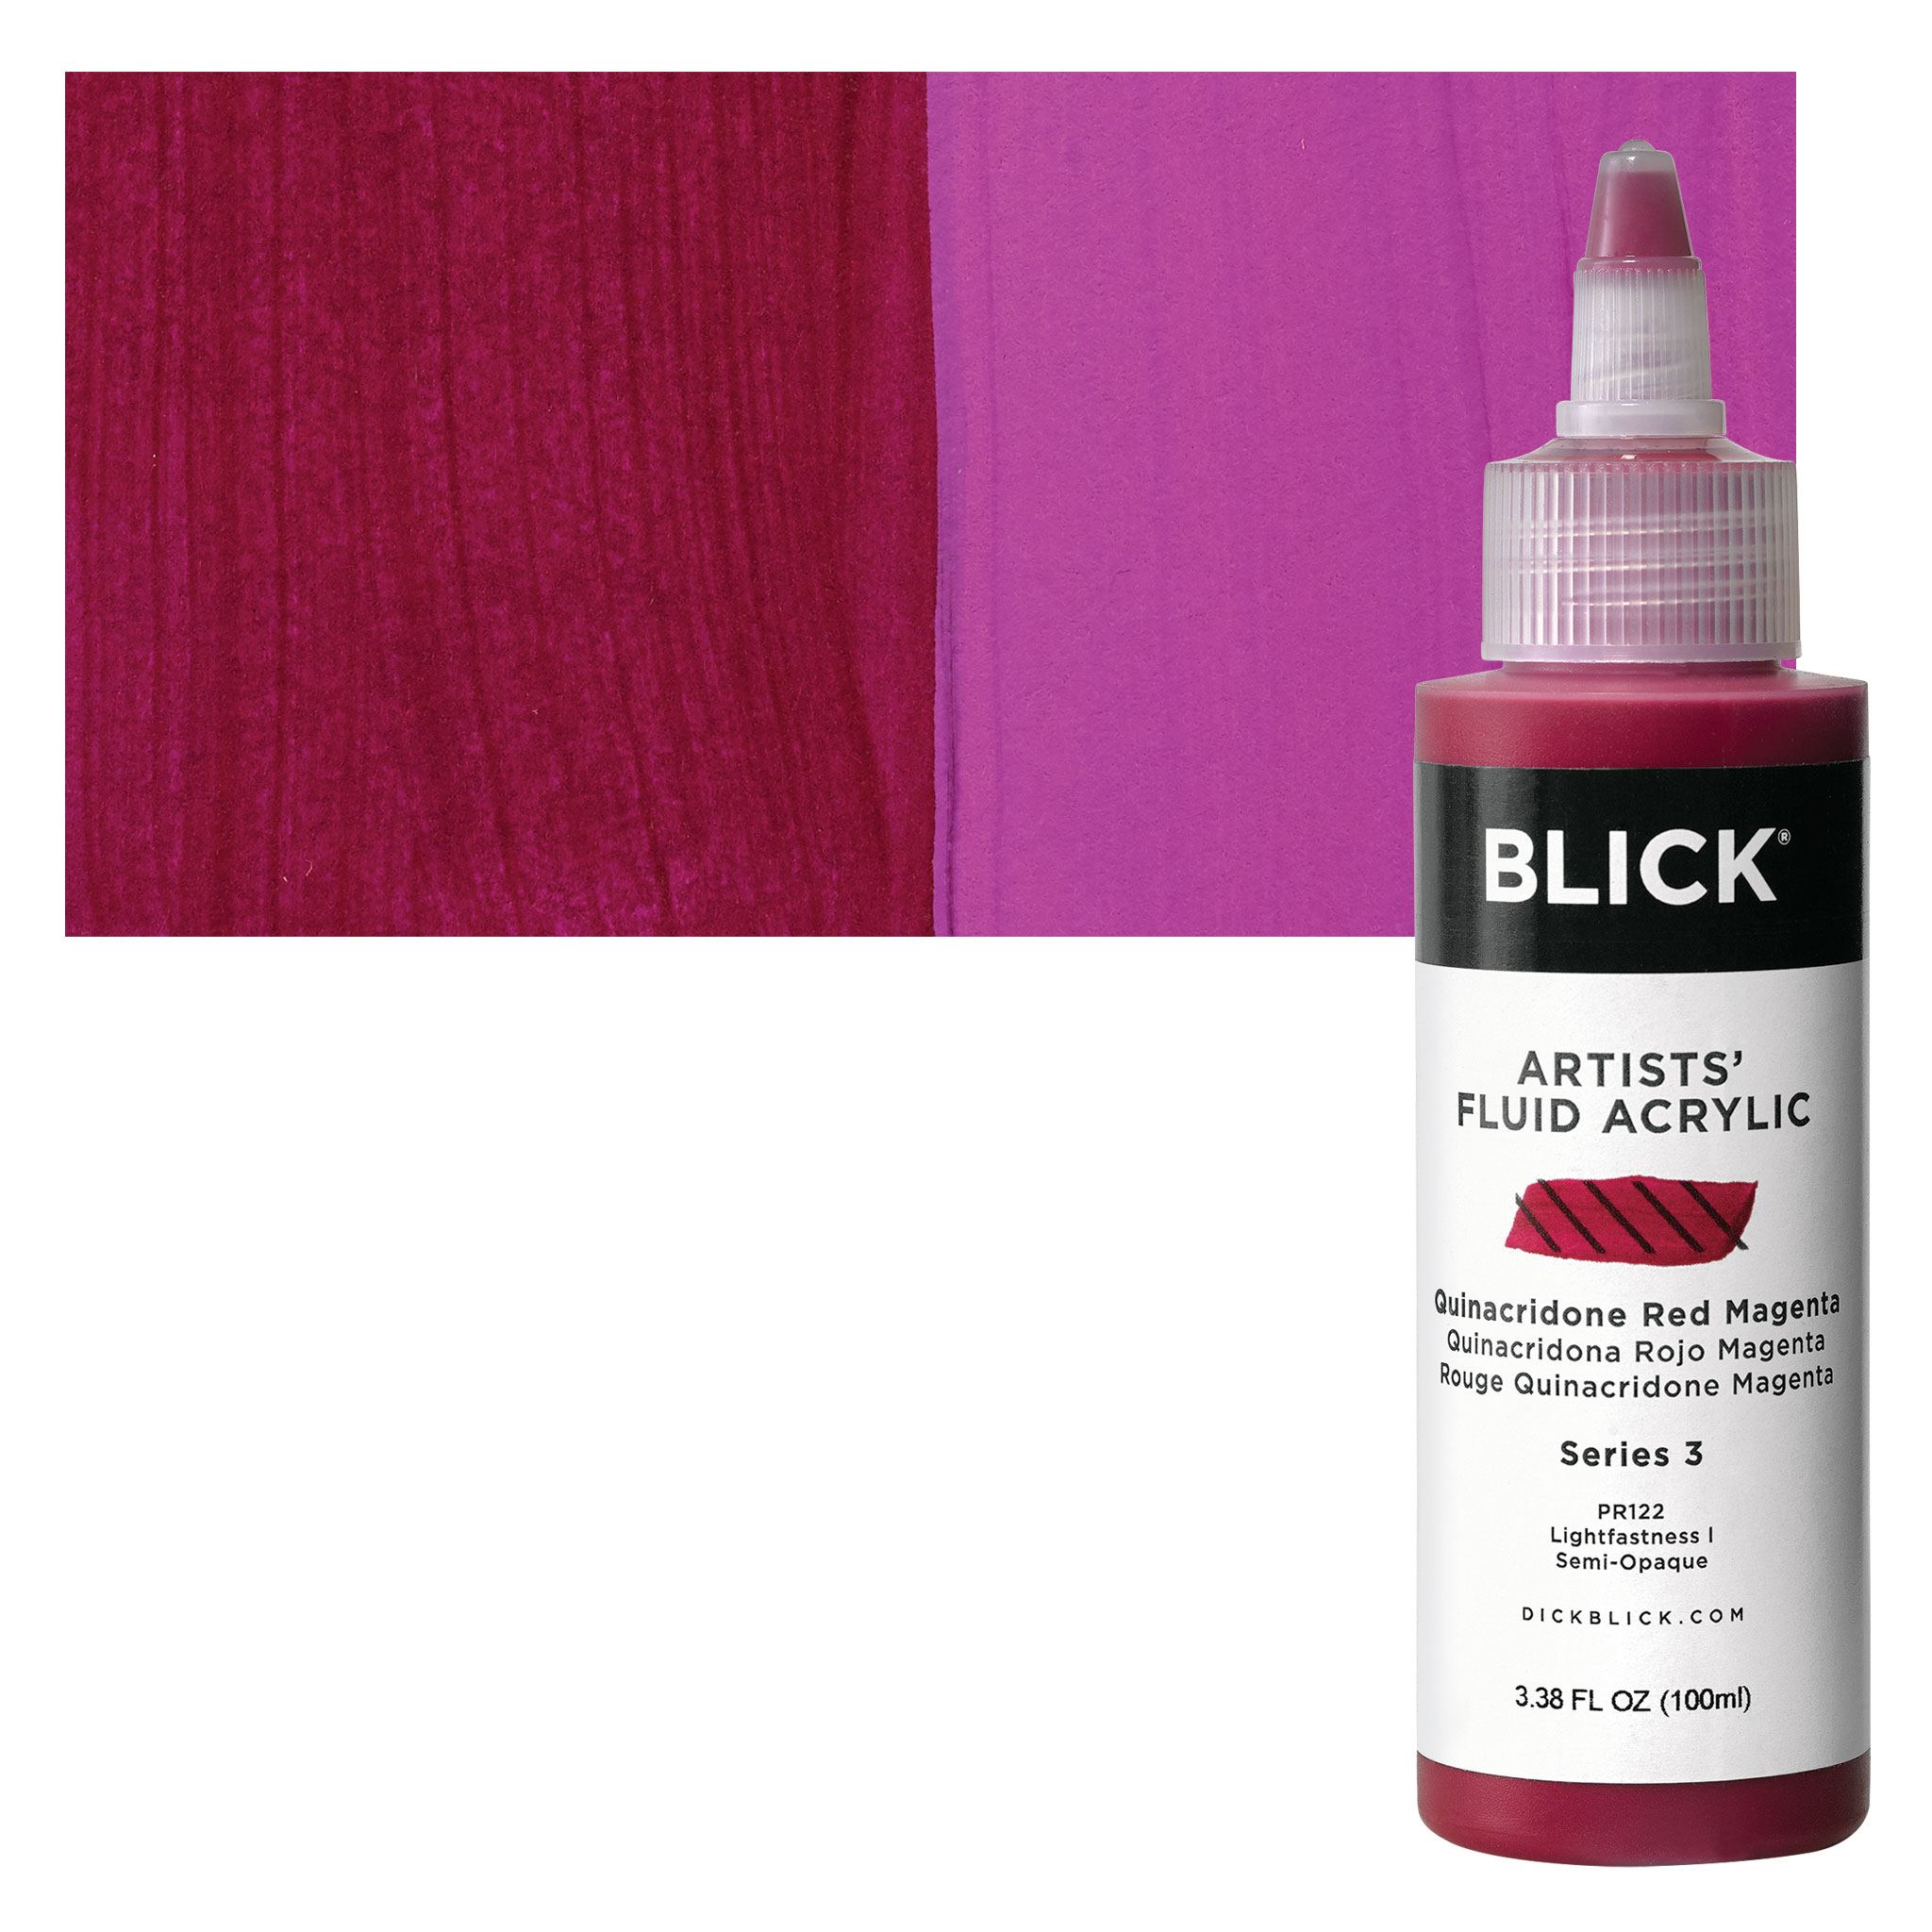 Blick Artists' Fluid Acrylic - Fluorescent Pink, 200 ml